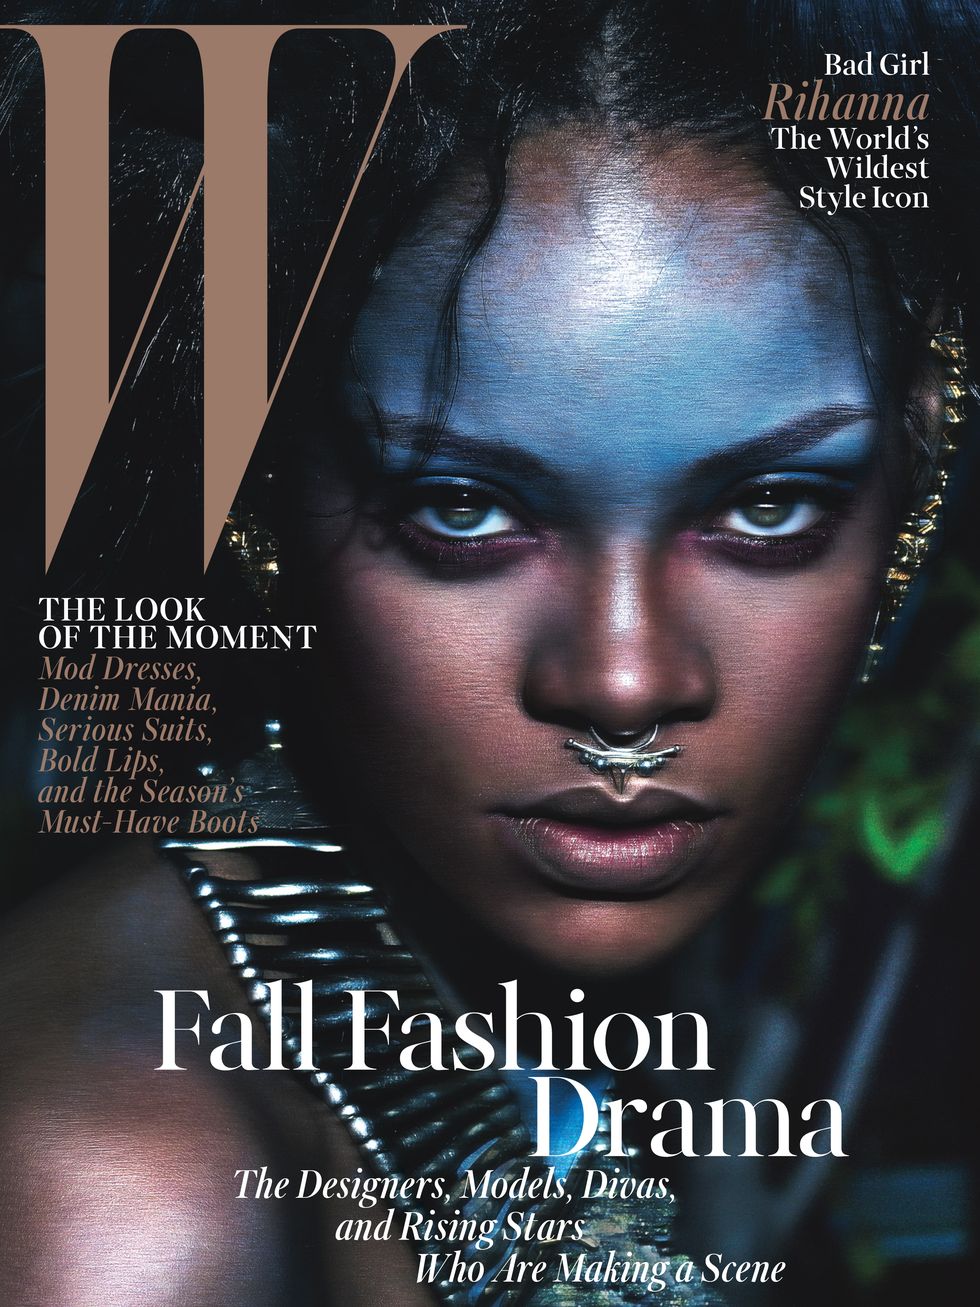 Rihanna on W Magazine cover - fashion photos - cosomopolitan.co.uk